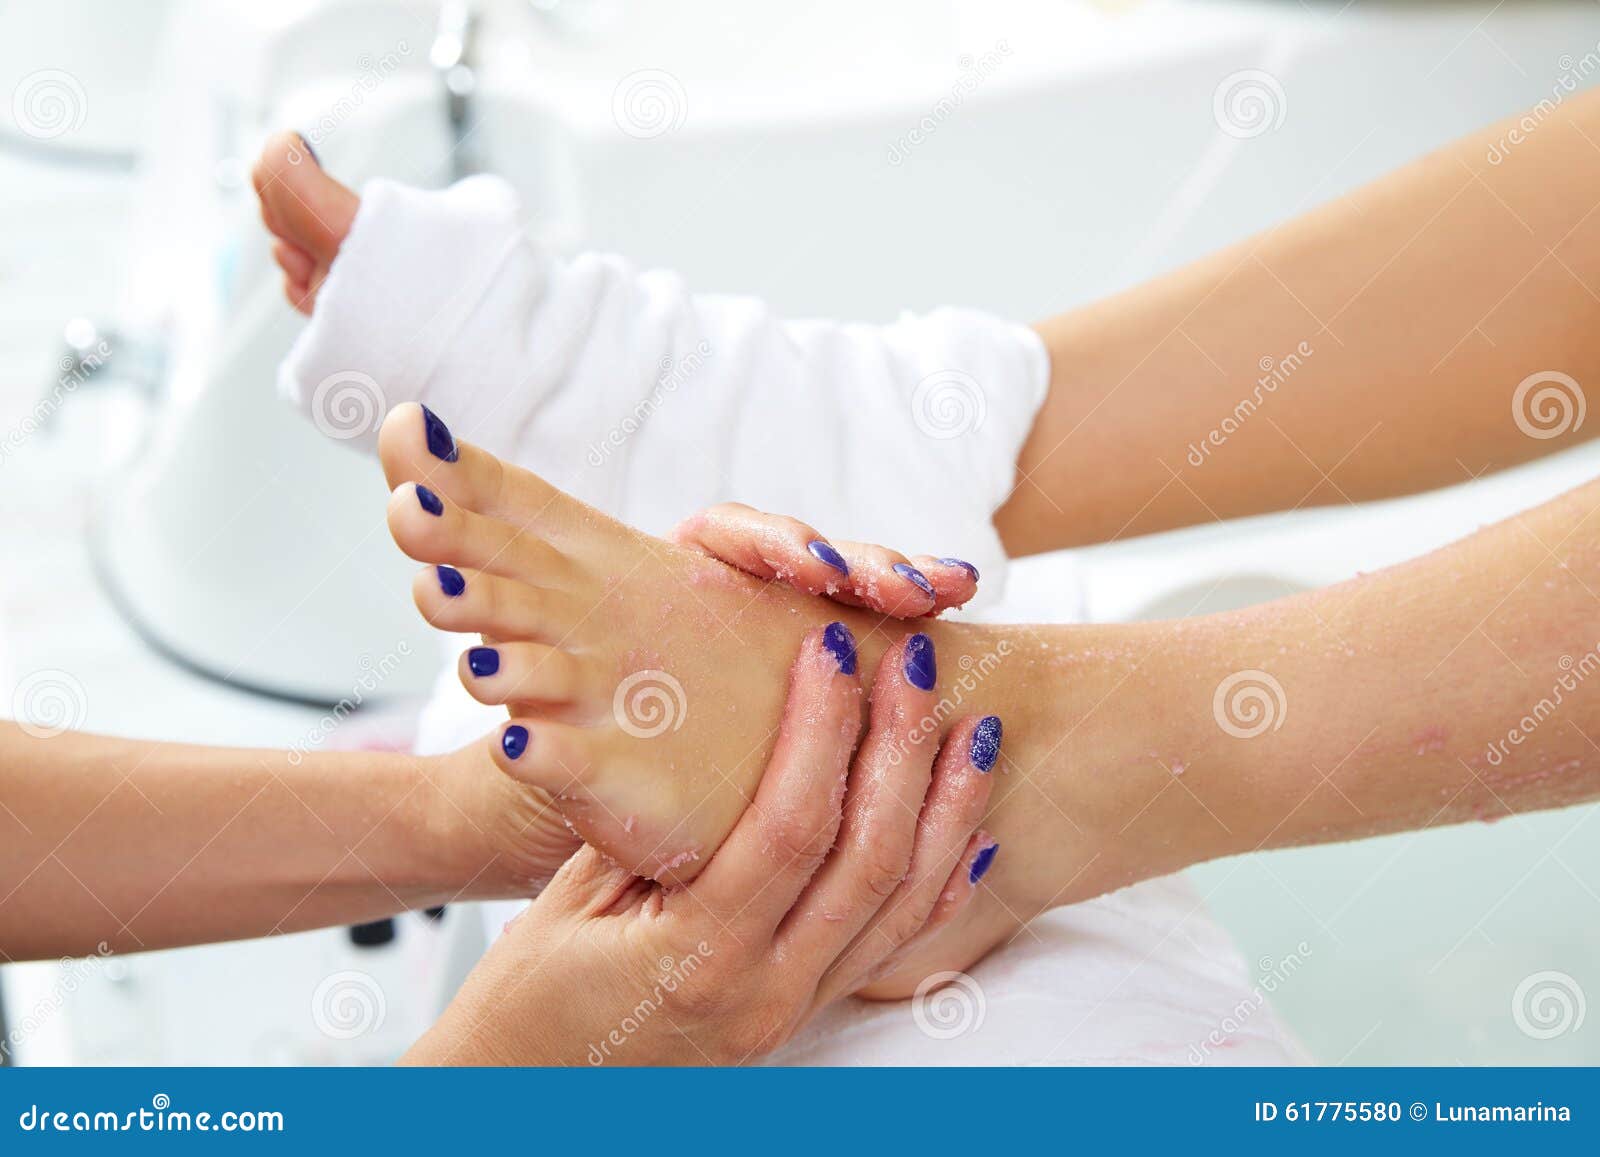 foot scrub pedicure woman leg in nail salon